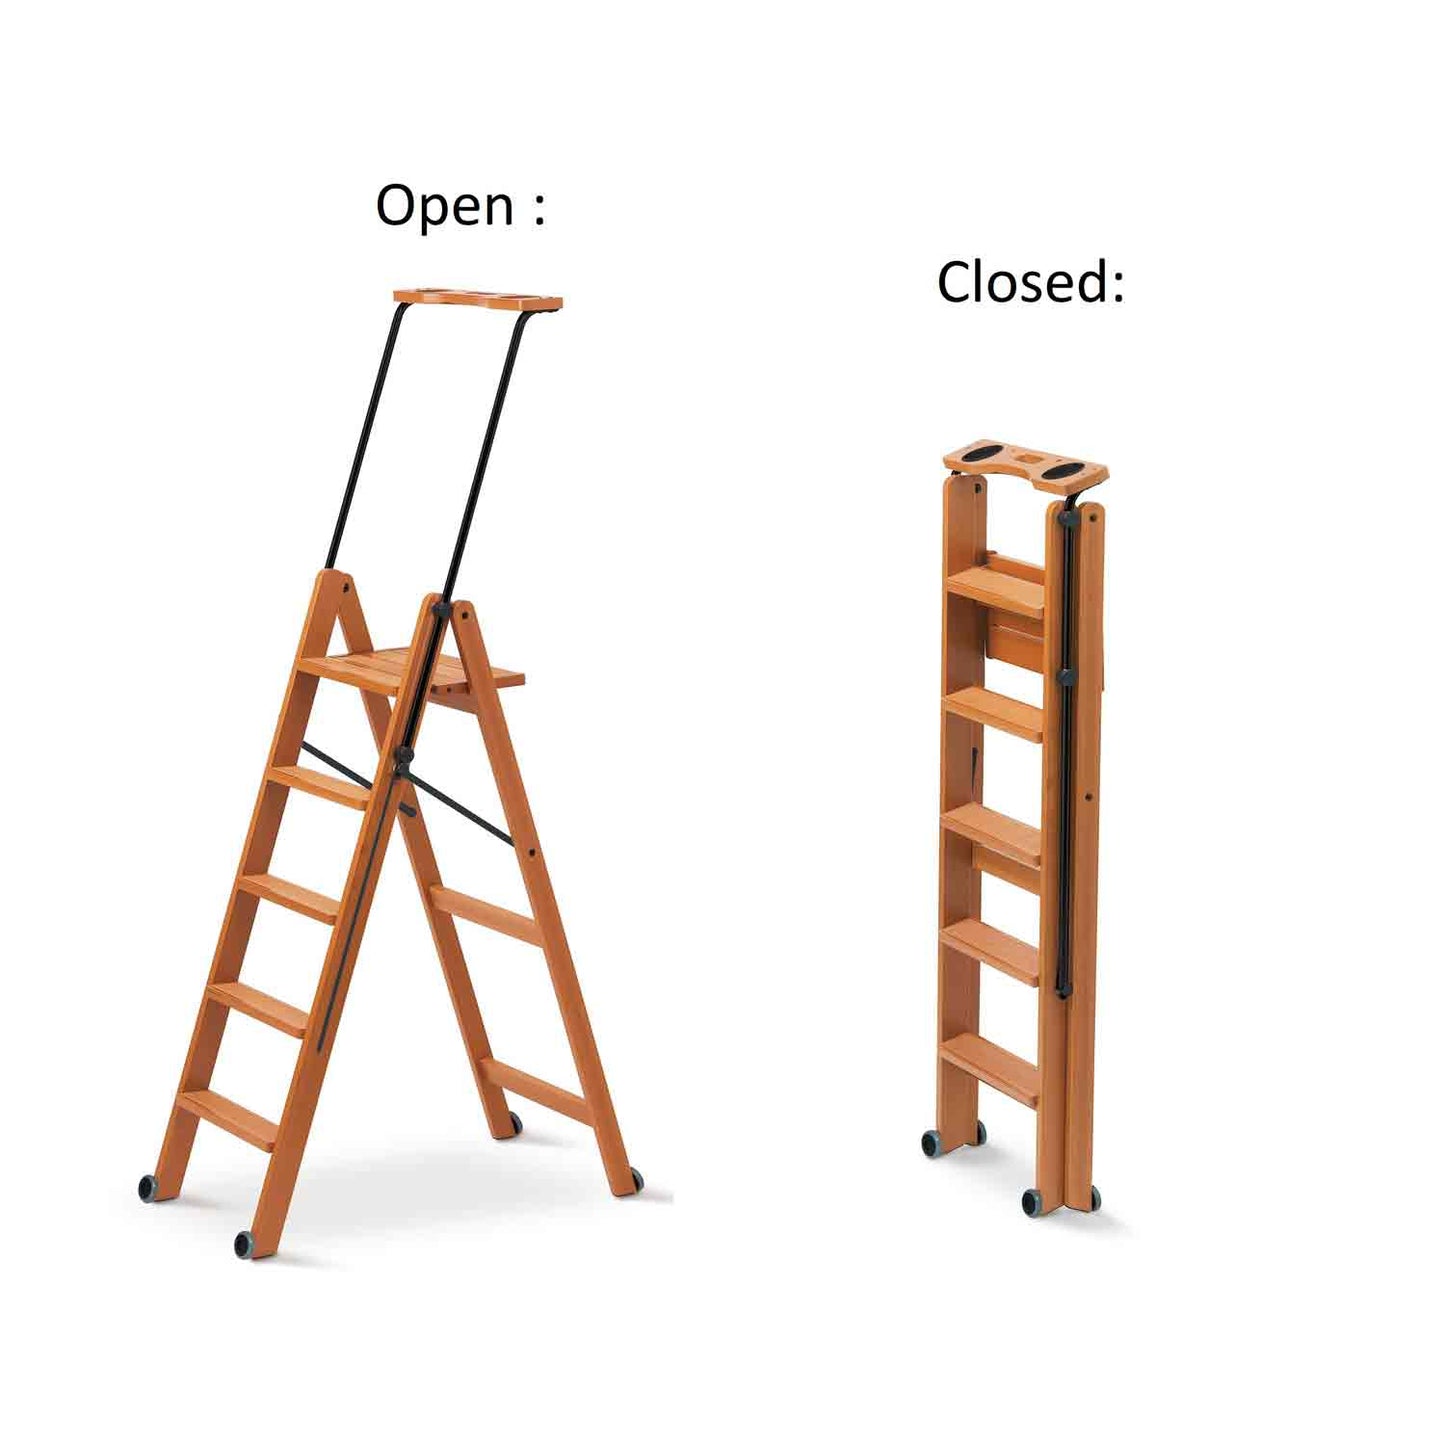 Escalera de madera, Escalera, peldaños antideslizantes, sistema único de apertura. Compacta, TUSCANIA 5